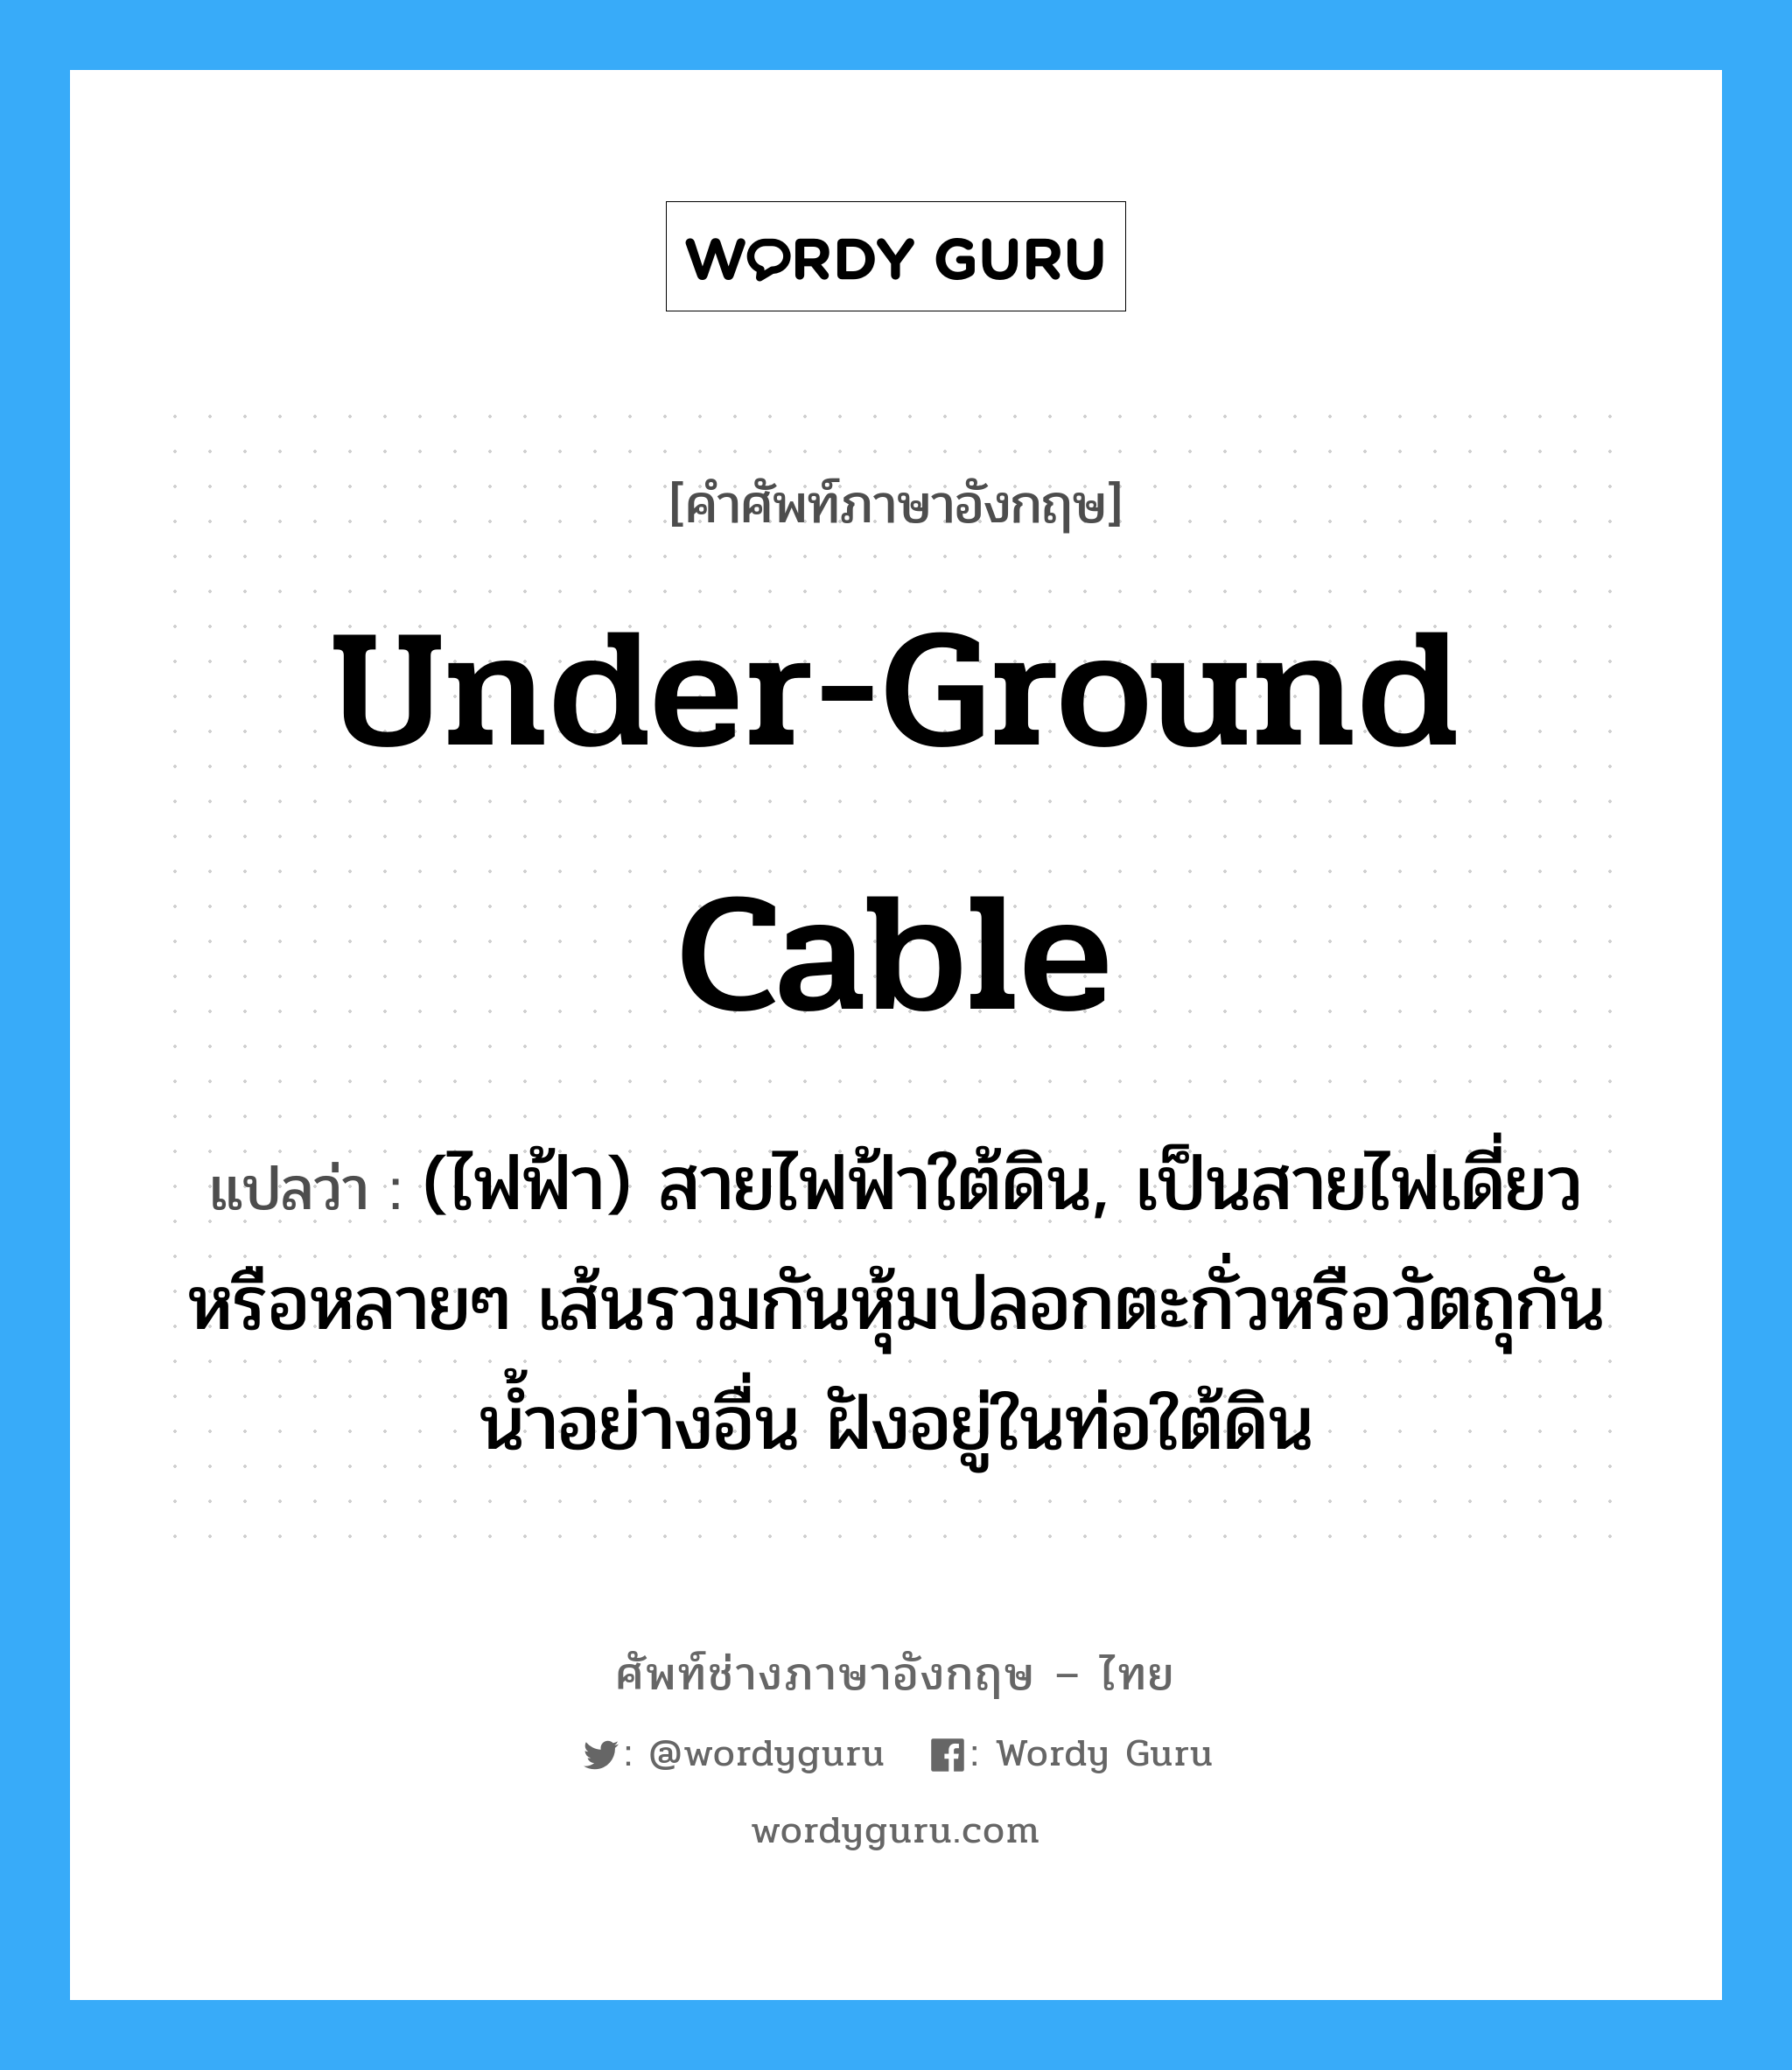 under-ground cable แปลว่า?, คำศัพท์ช่างภาษาอังกฤษ - ไทย under-ground cable คำศัพท์ภาษาอังกฤษ under-ground cable แปลว่า (ไฟฟ้า) สายไฟฟ้าใต้ดิน, เป็นสายไฟเดี่ยวหรือหลายๆ เส้นรวมกันหุ้มปลอกตะกั่วหรือวัตถุกันน้ำอย่างอื่น ฝังอยู่ในท่อใต้ดิน